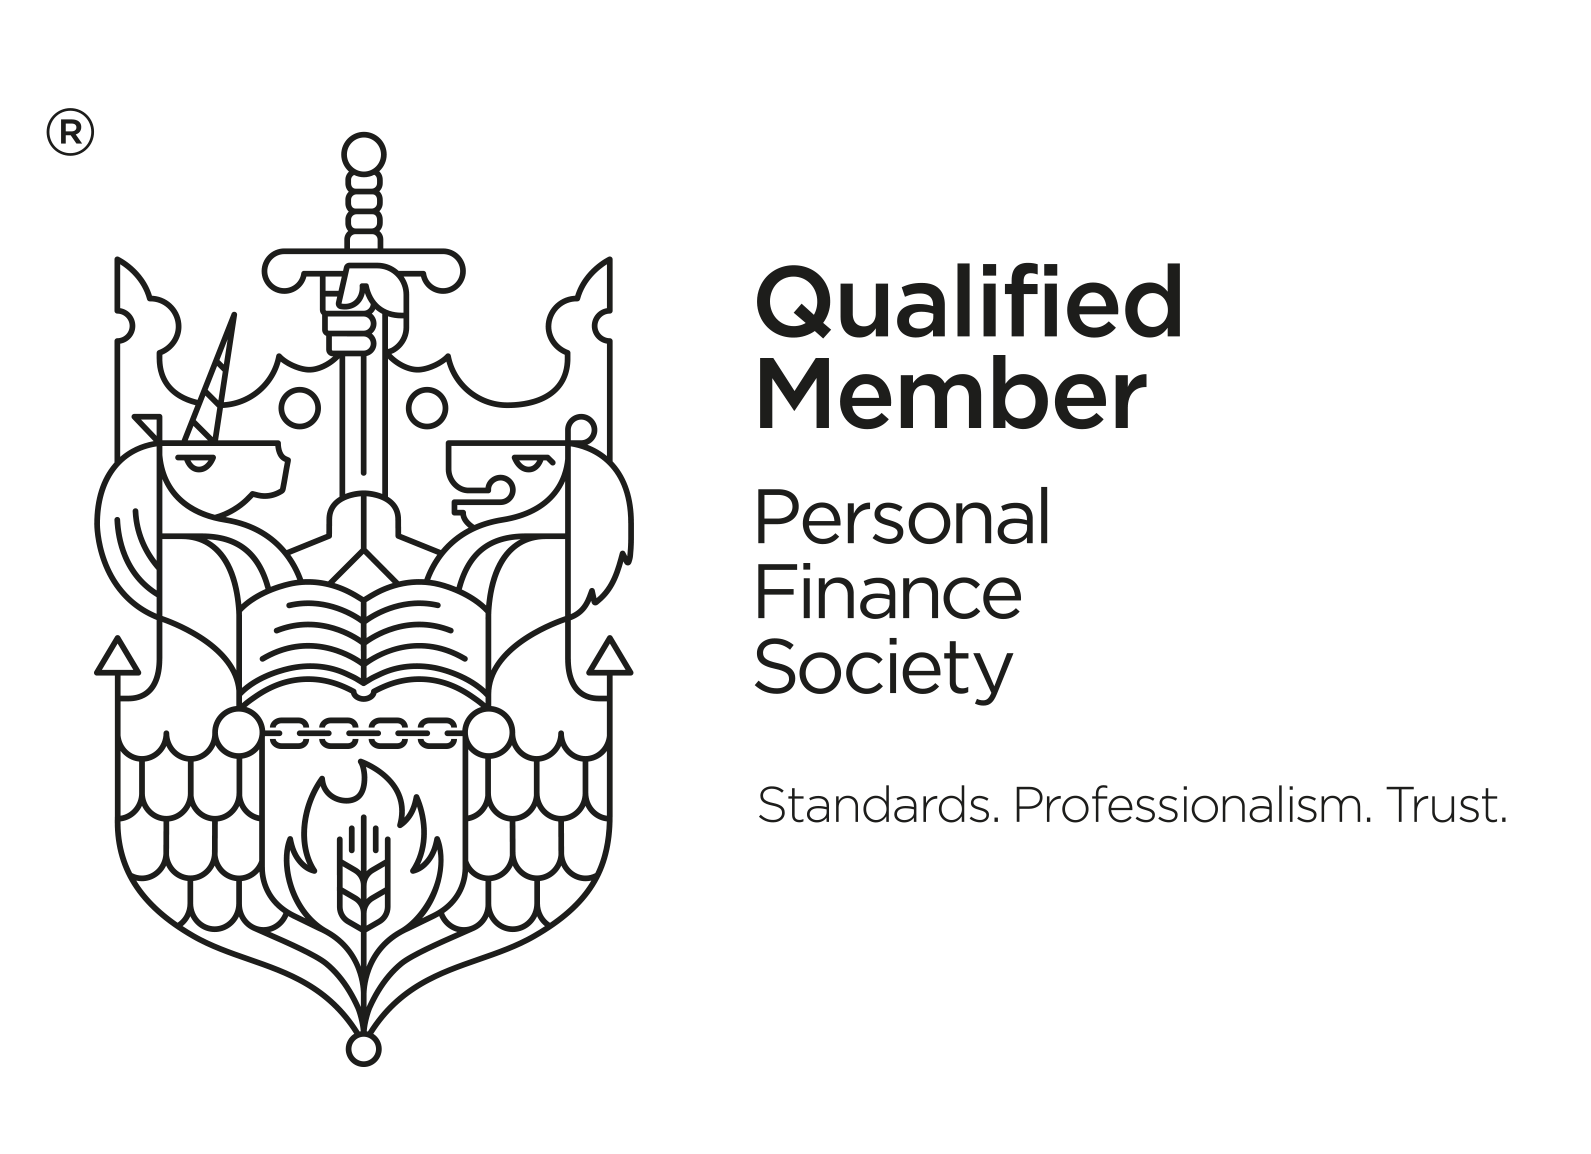 Personal Finance Society Accreditation